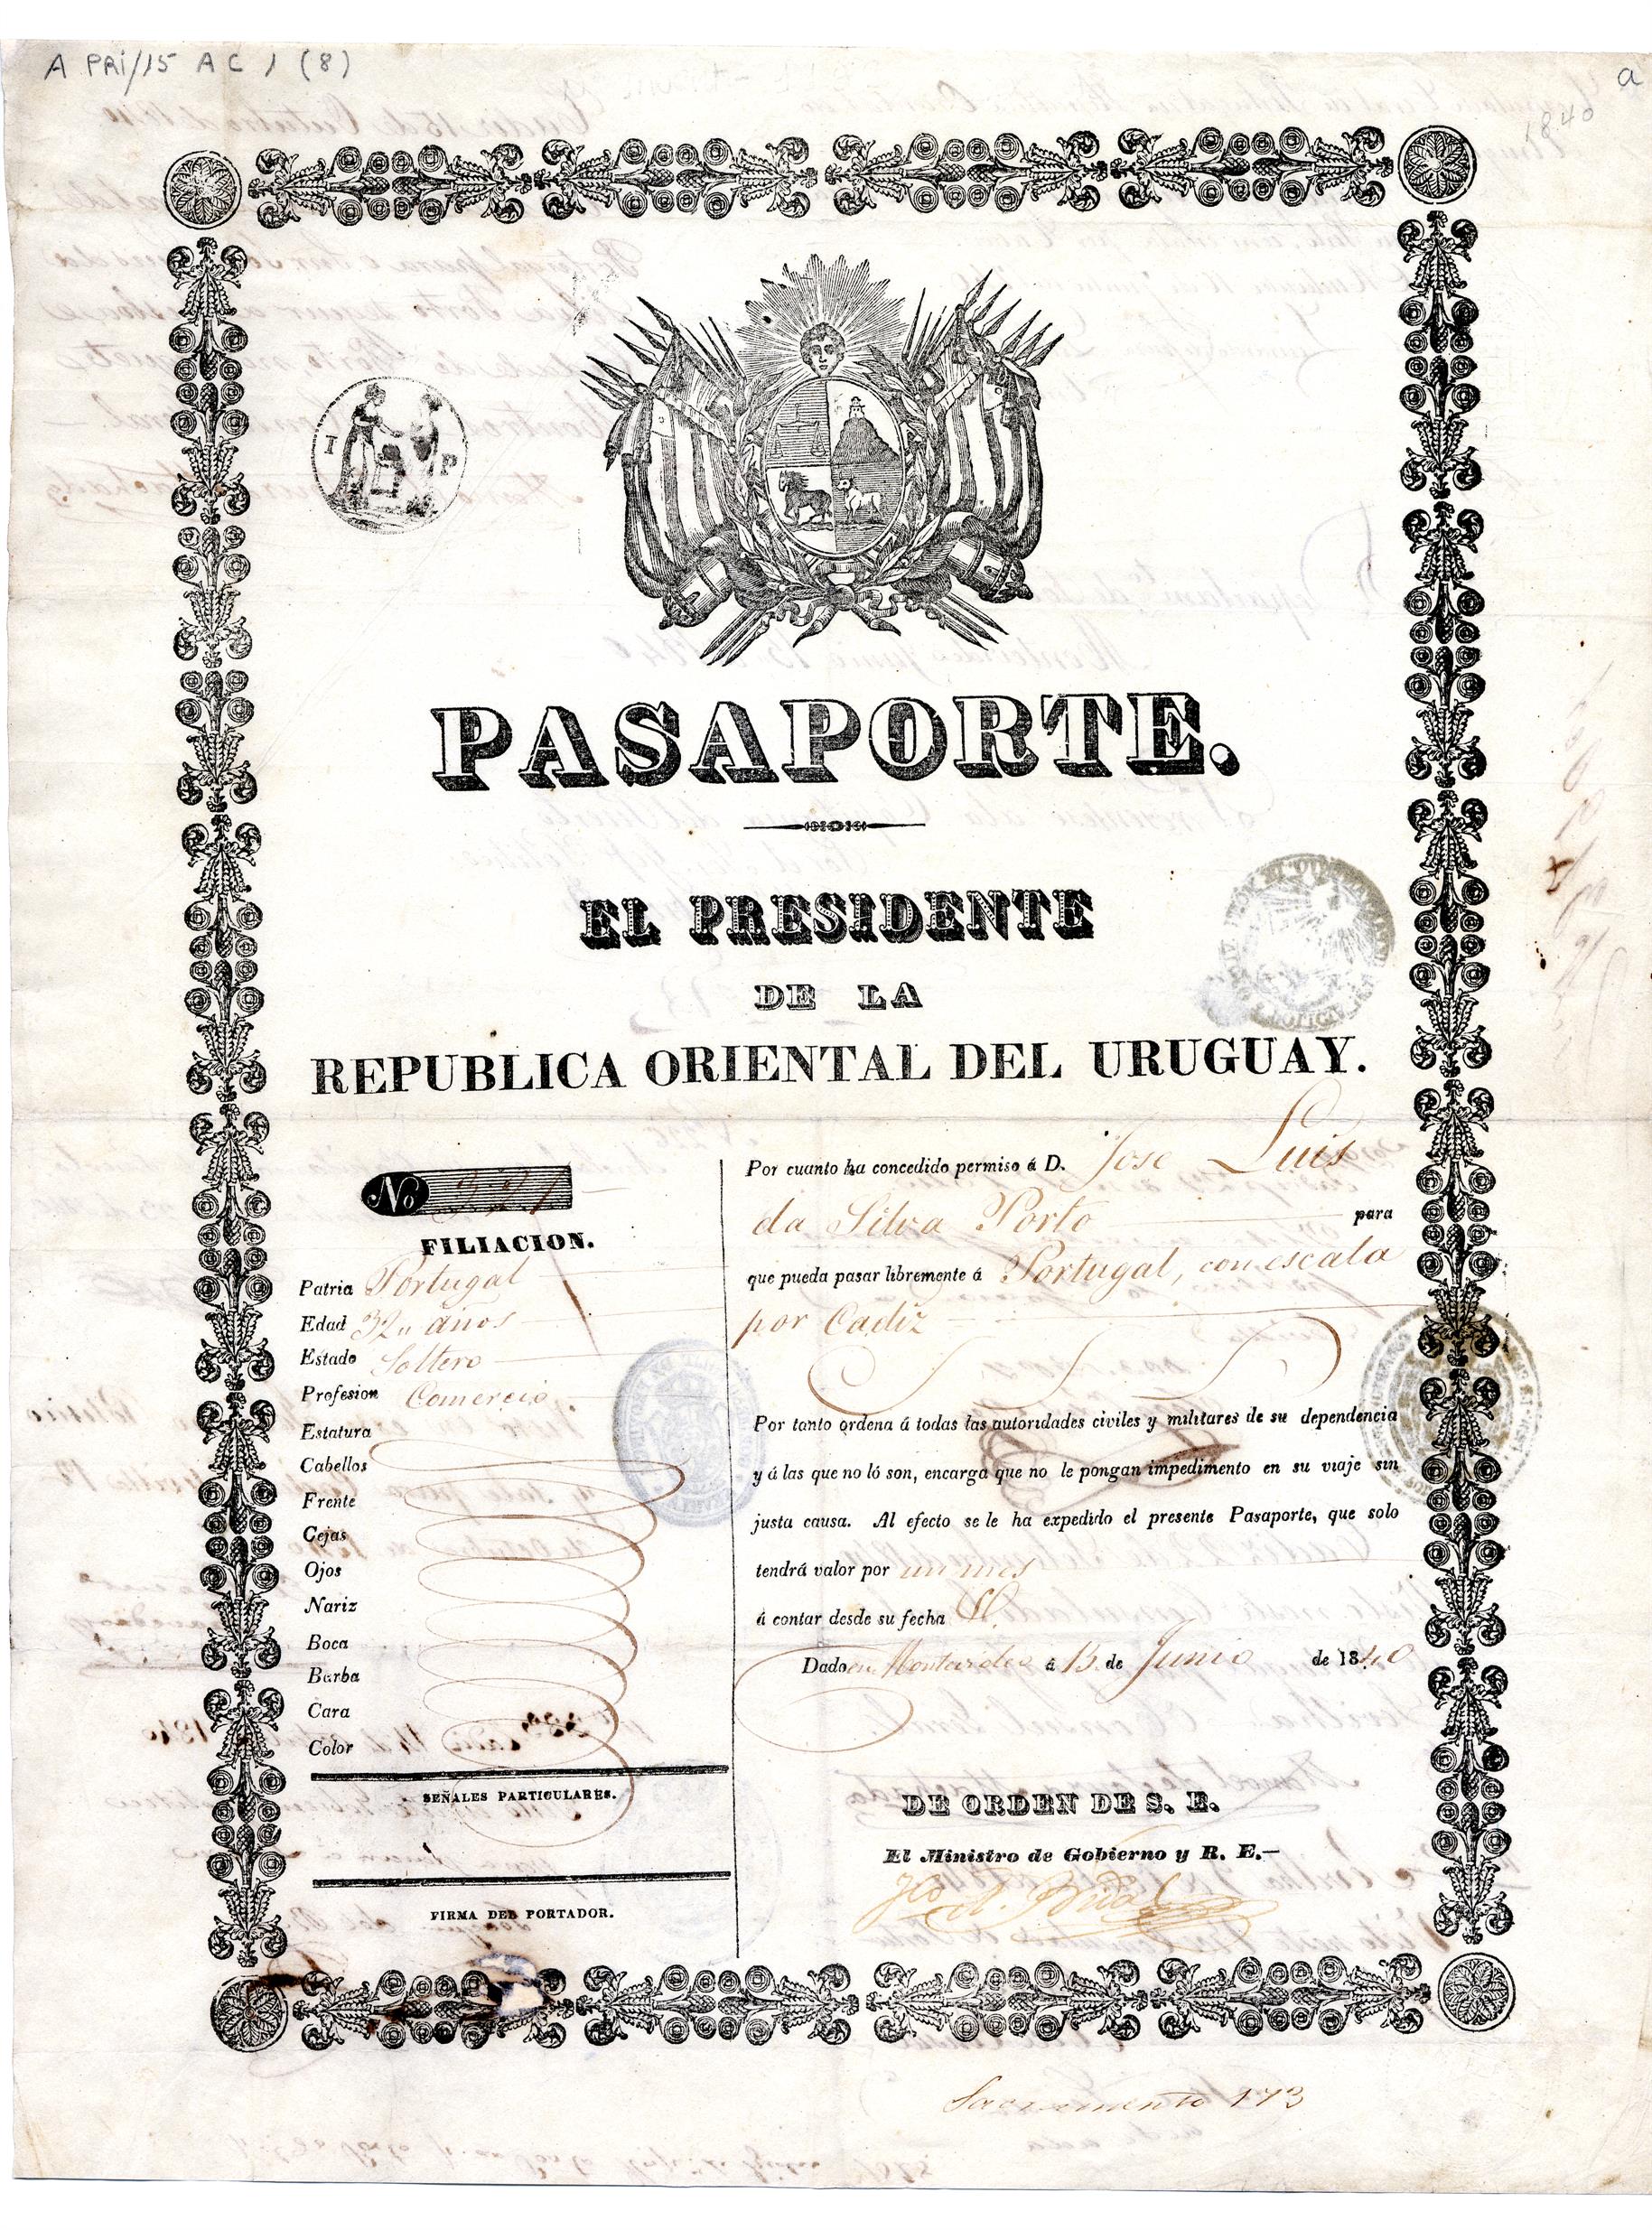 Passaporte de José Luís da Silva Porto